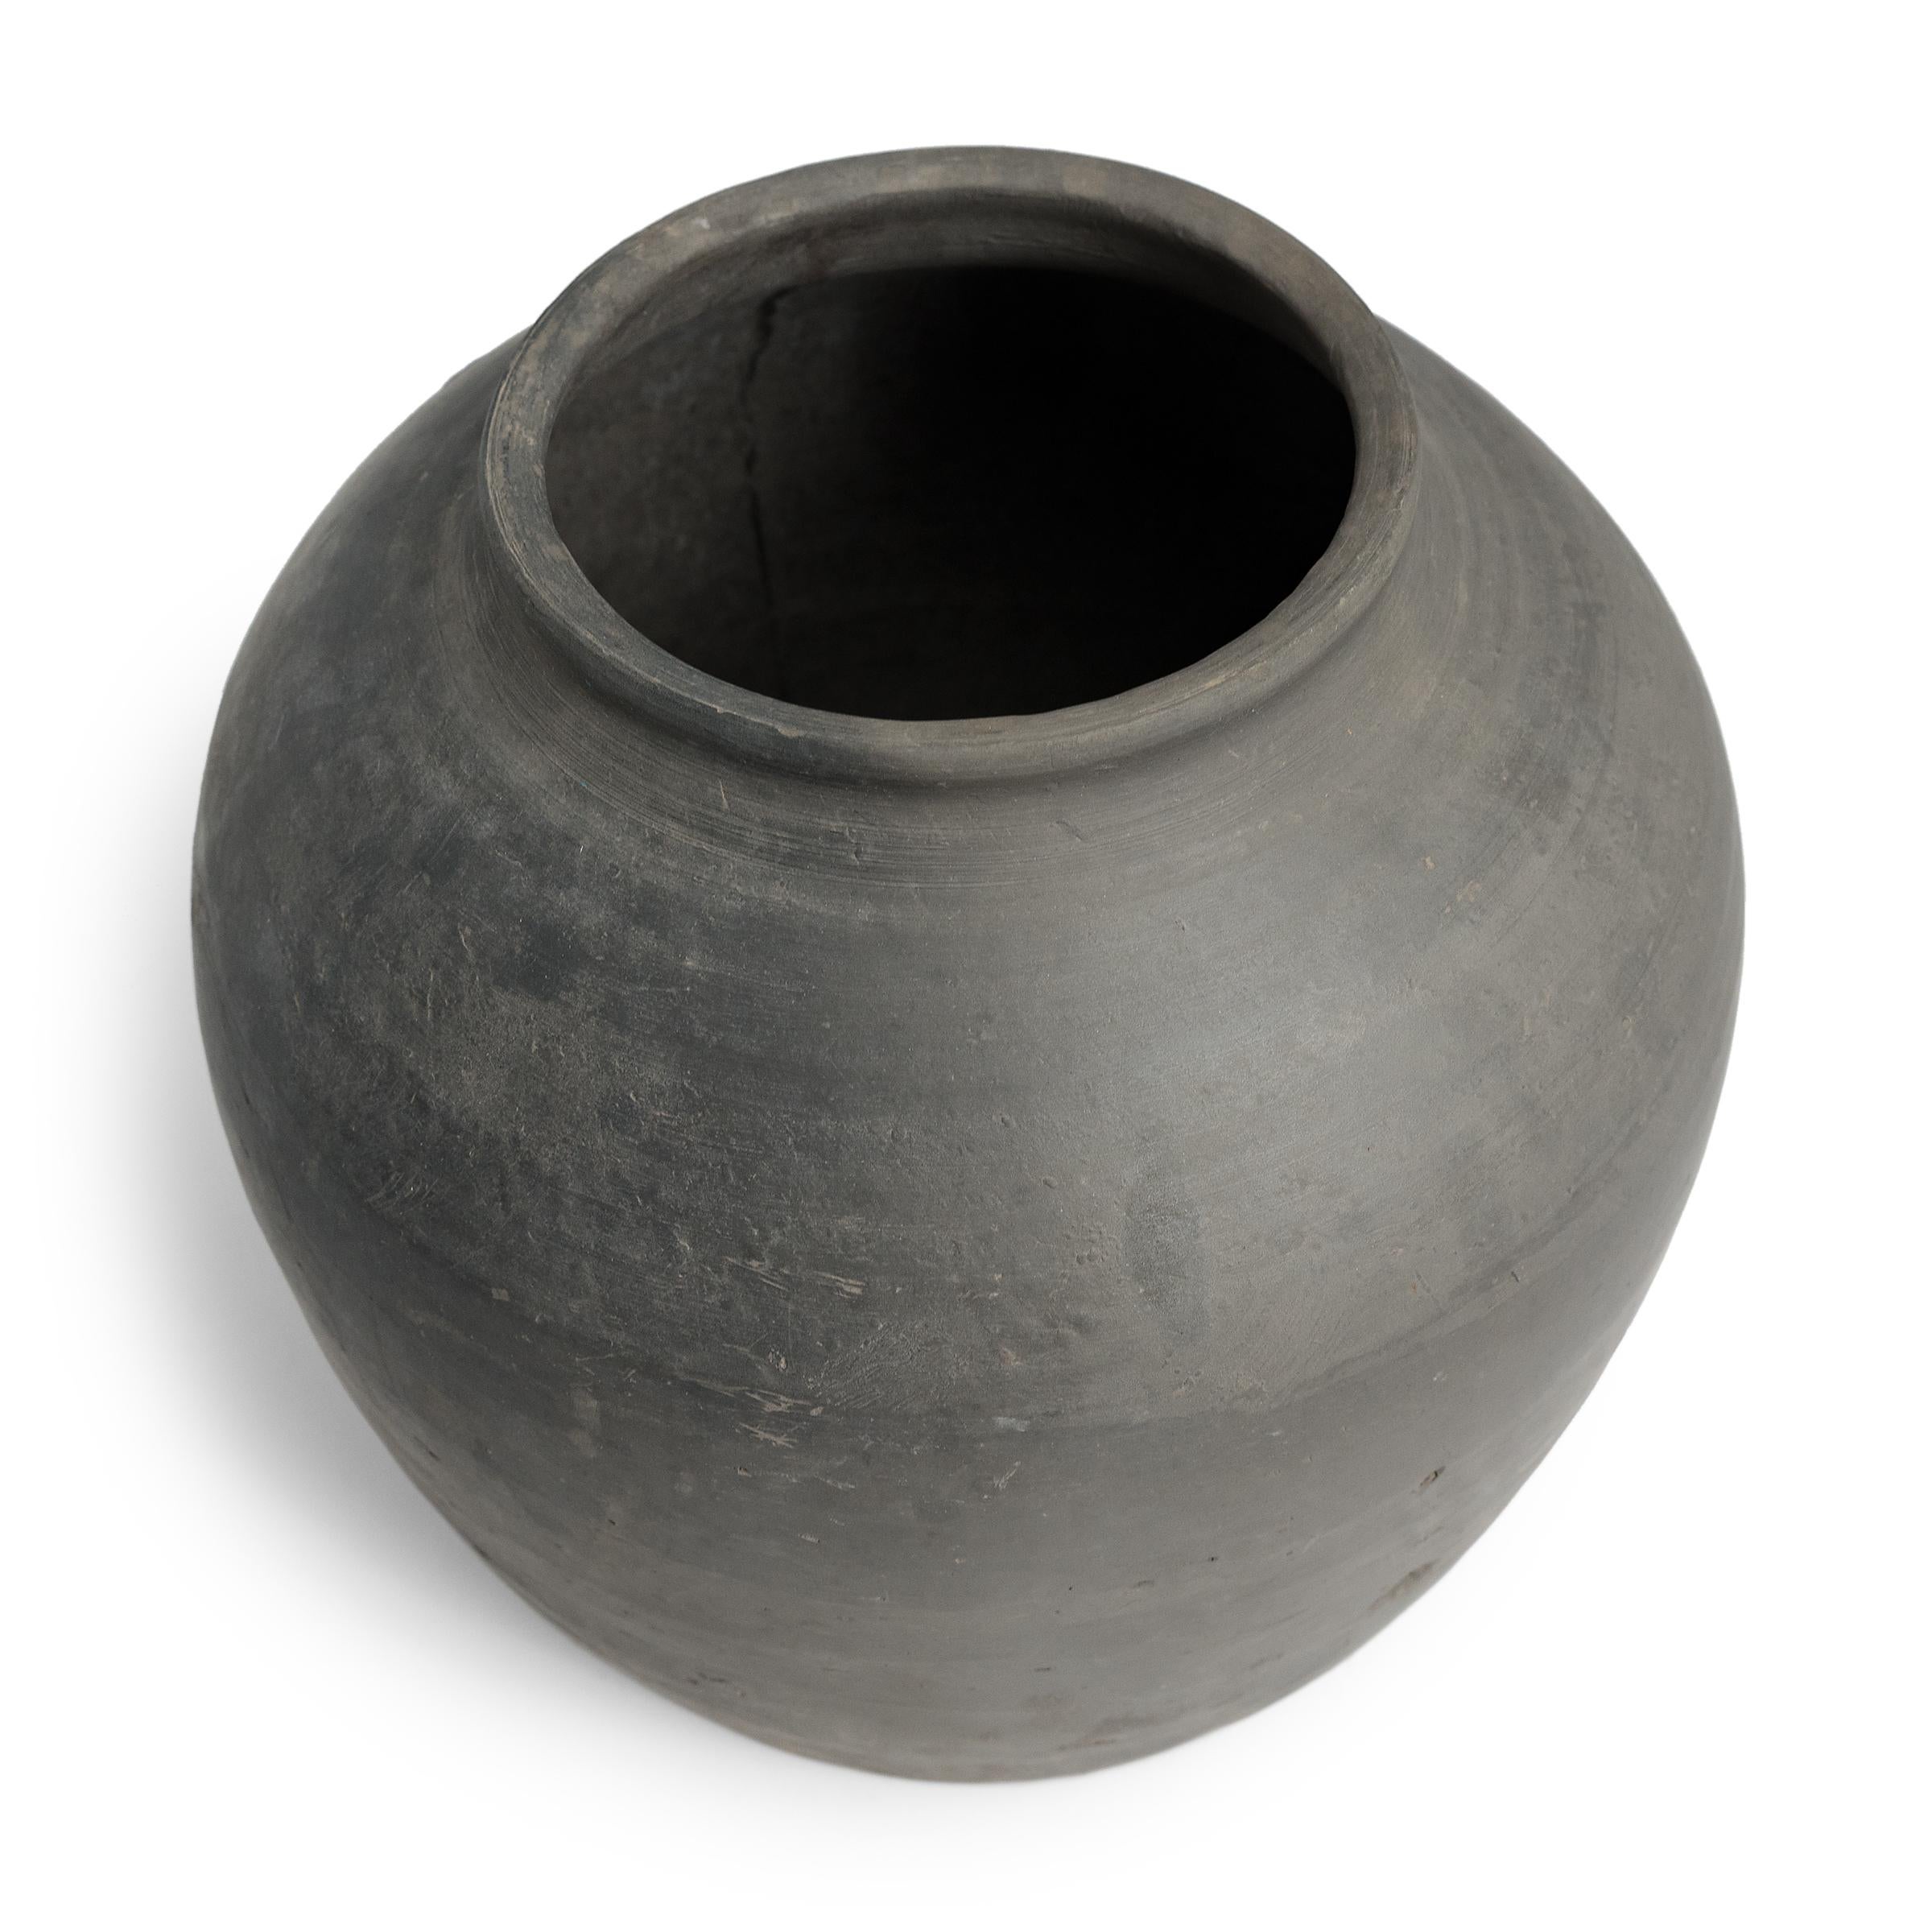 Qing Chinese Black Clay Vessel, circa 1900